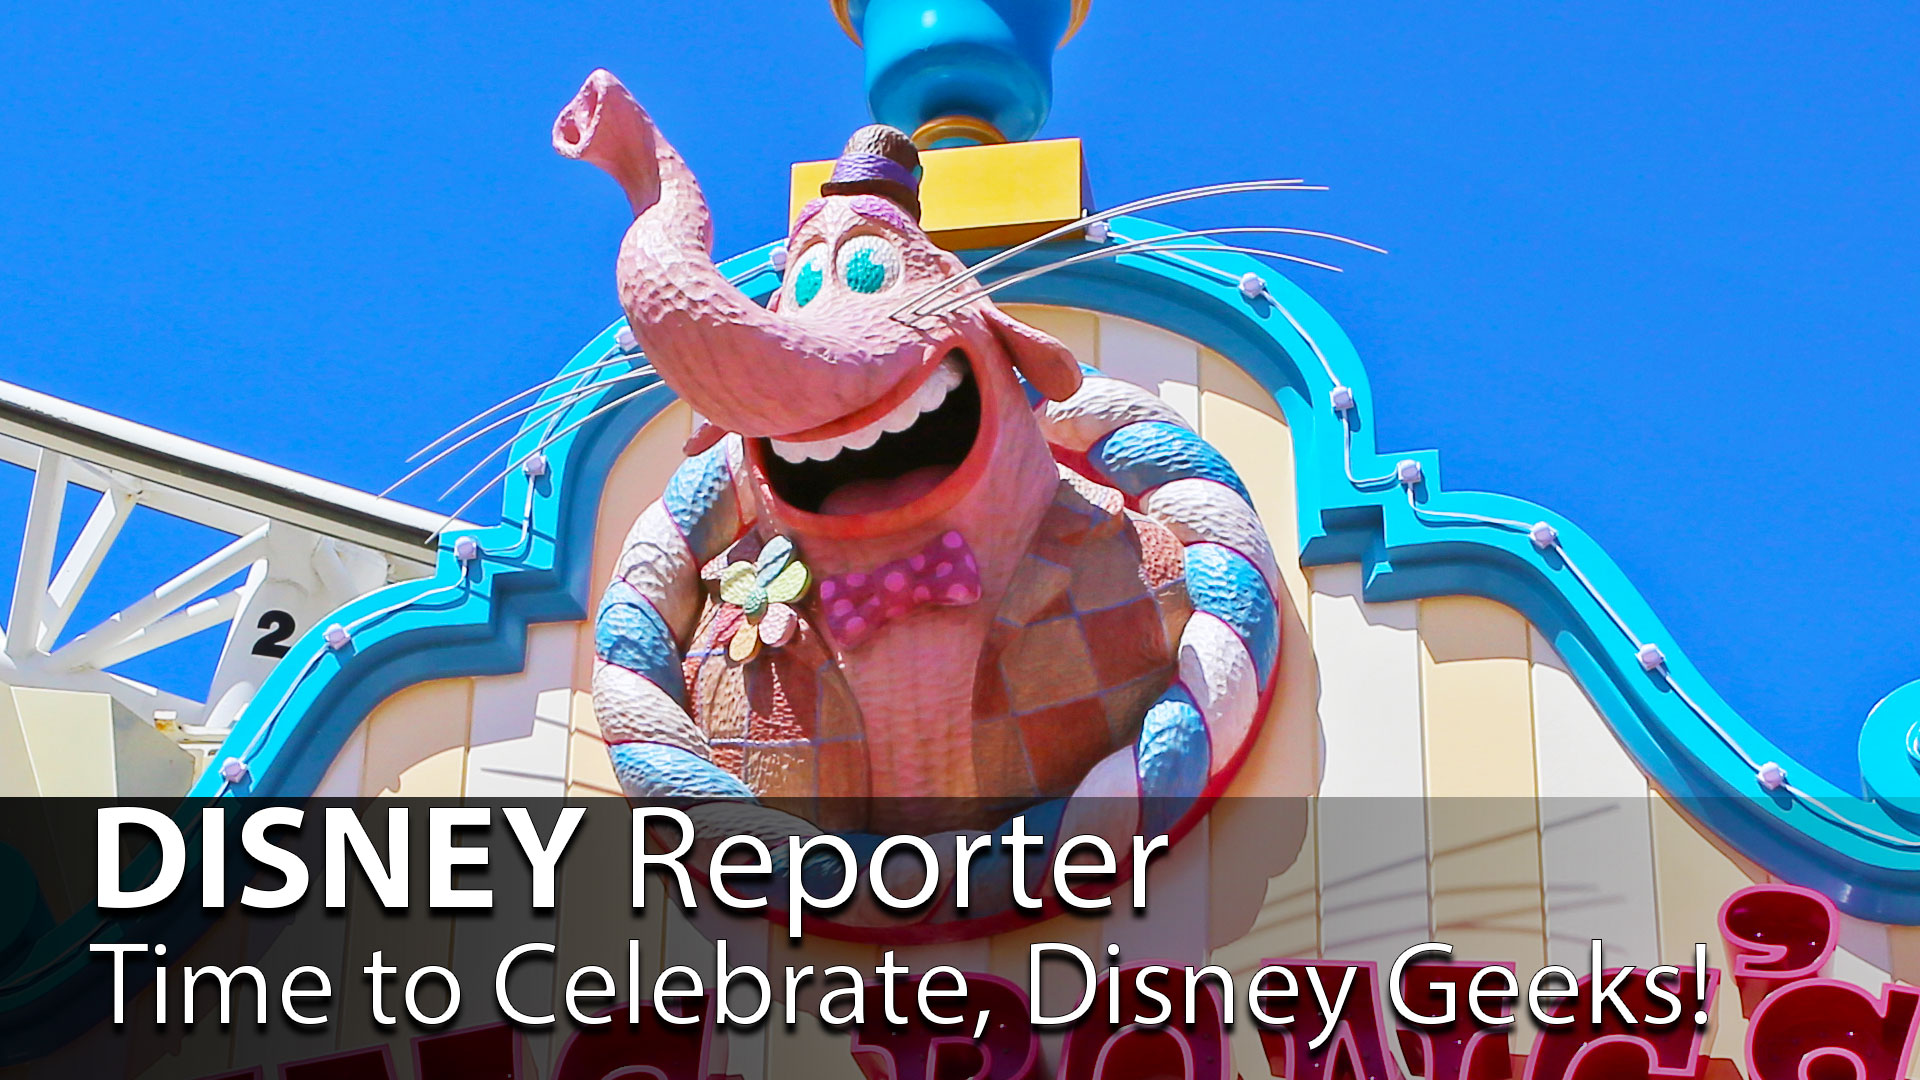 Time to Celebrate, Disney Geeks! - DISNEY Reporter